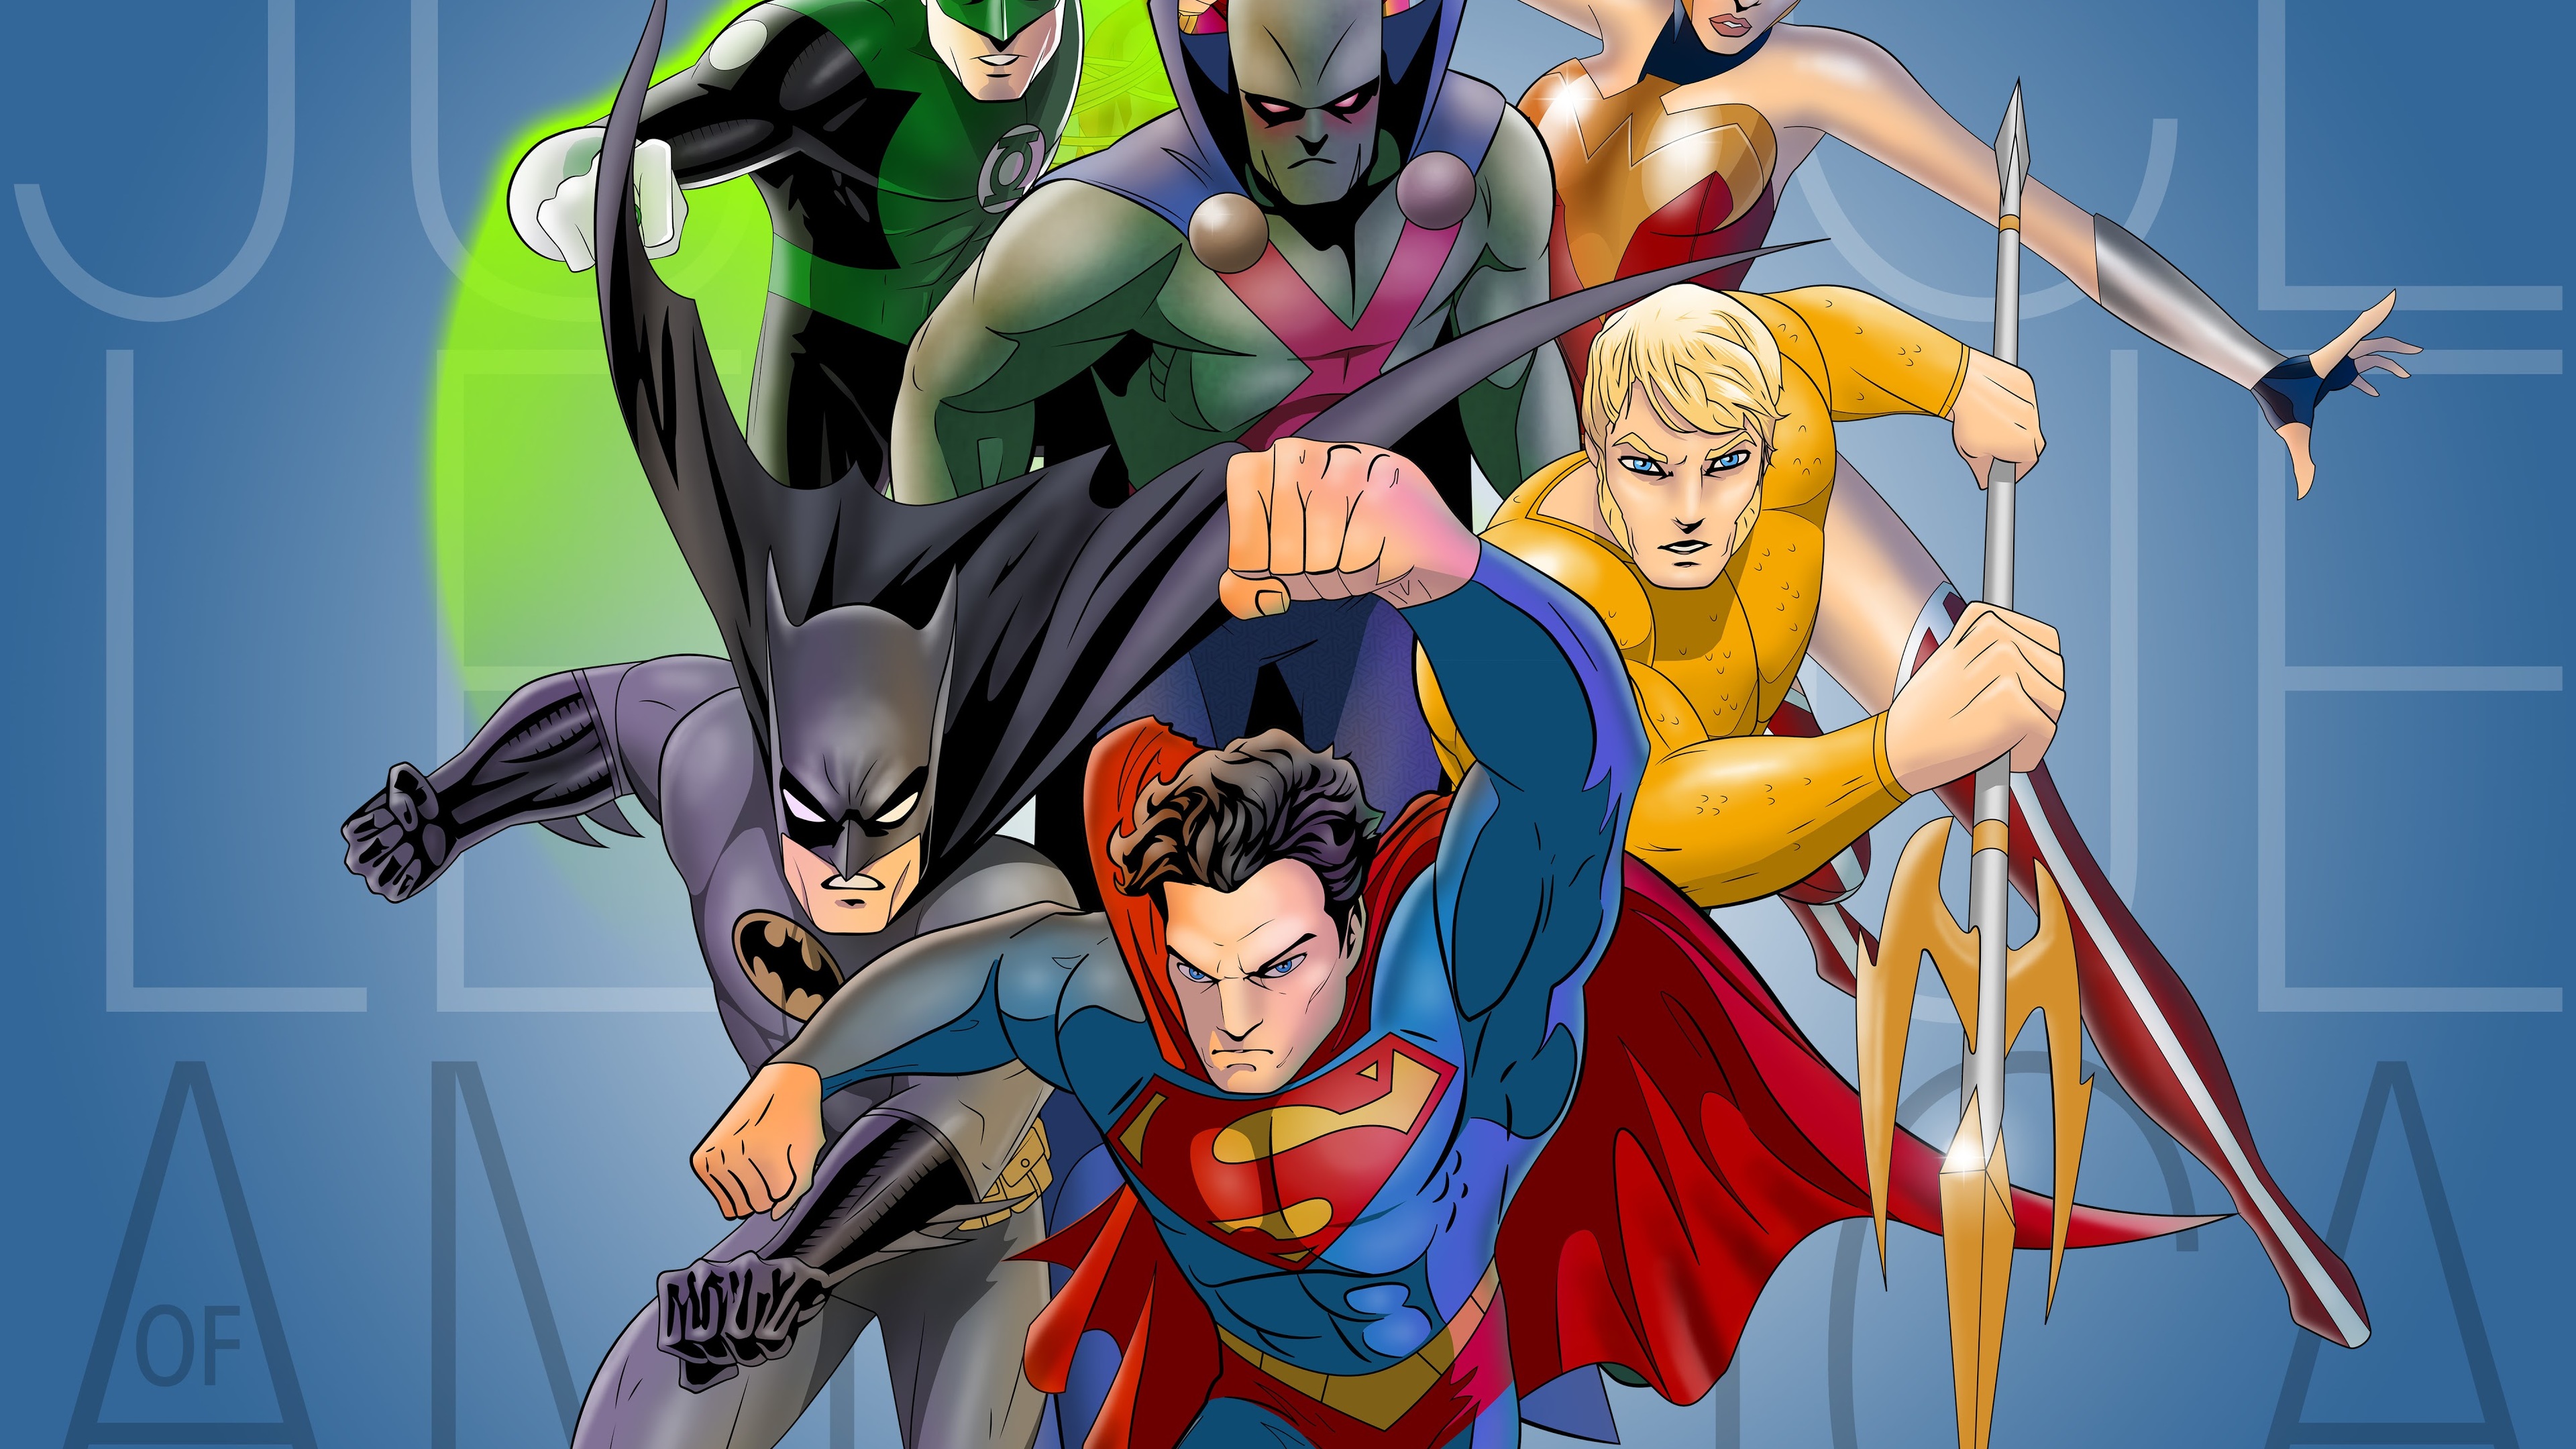 Superman Justice League Artwork Wallpapers